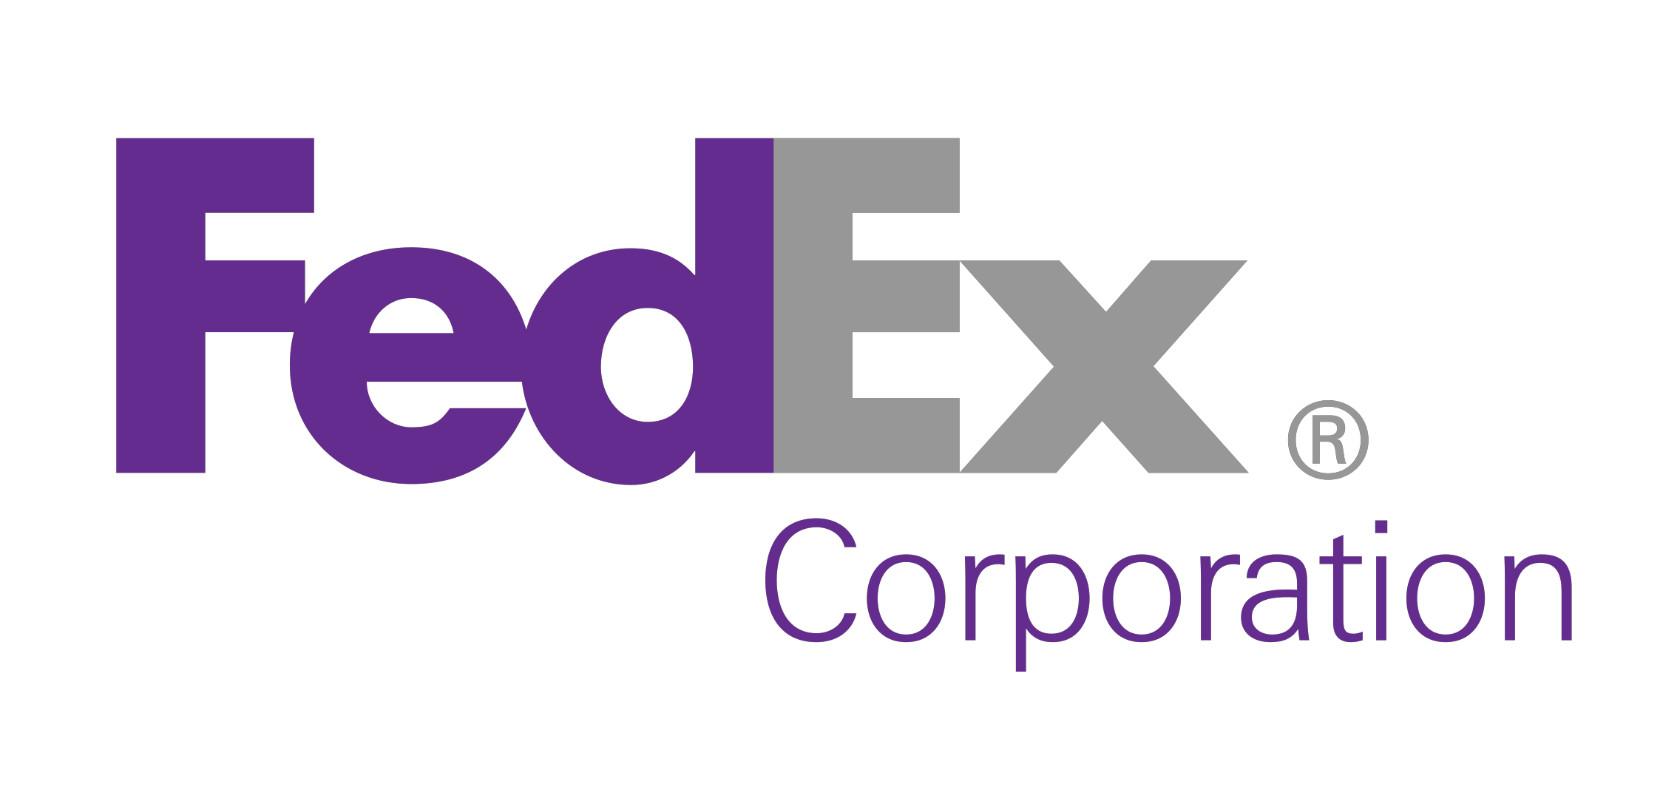 The FedEx logo uses design fundamental white space to create a hidden arrow.